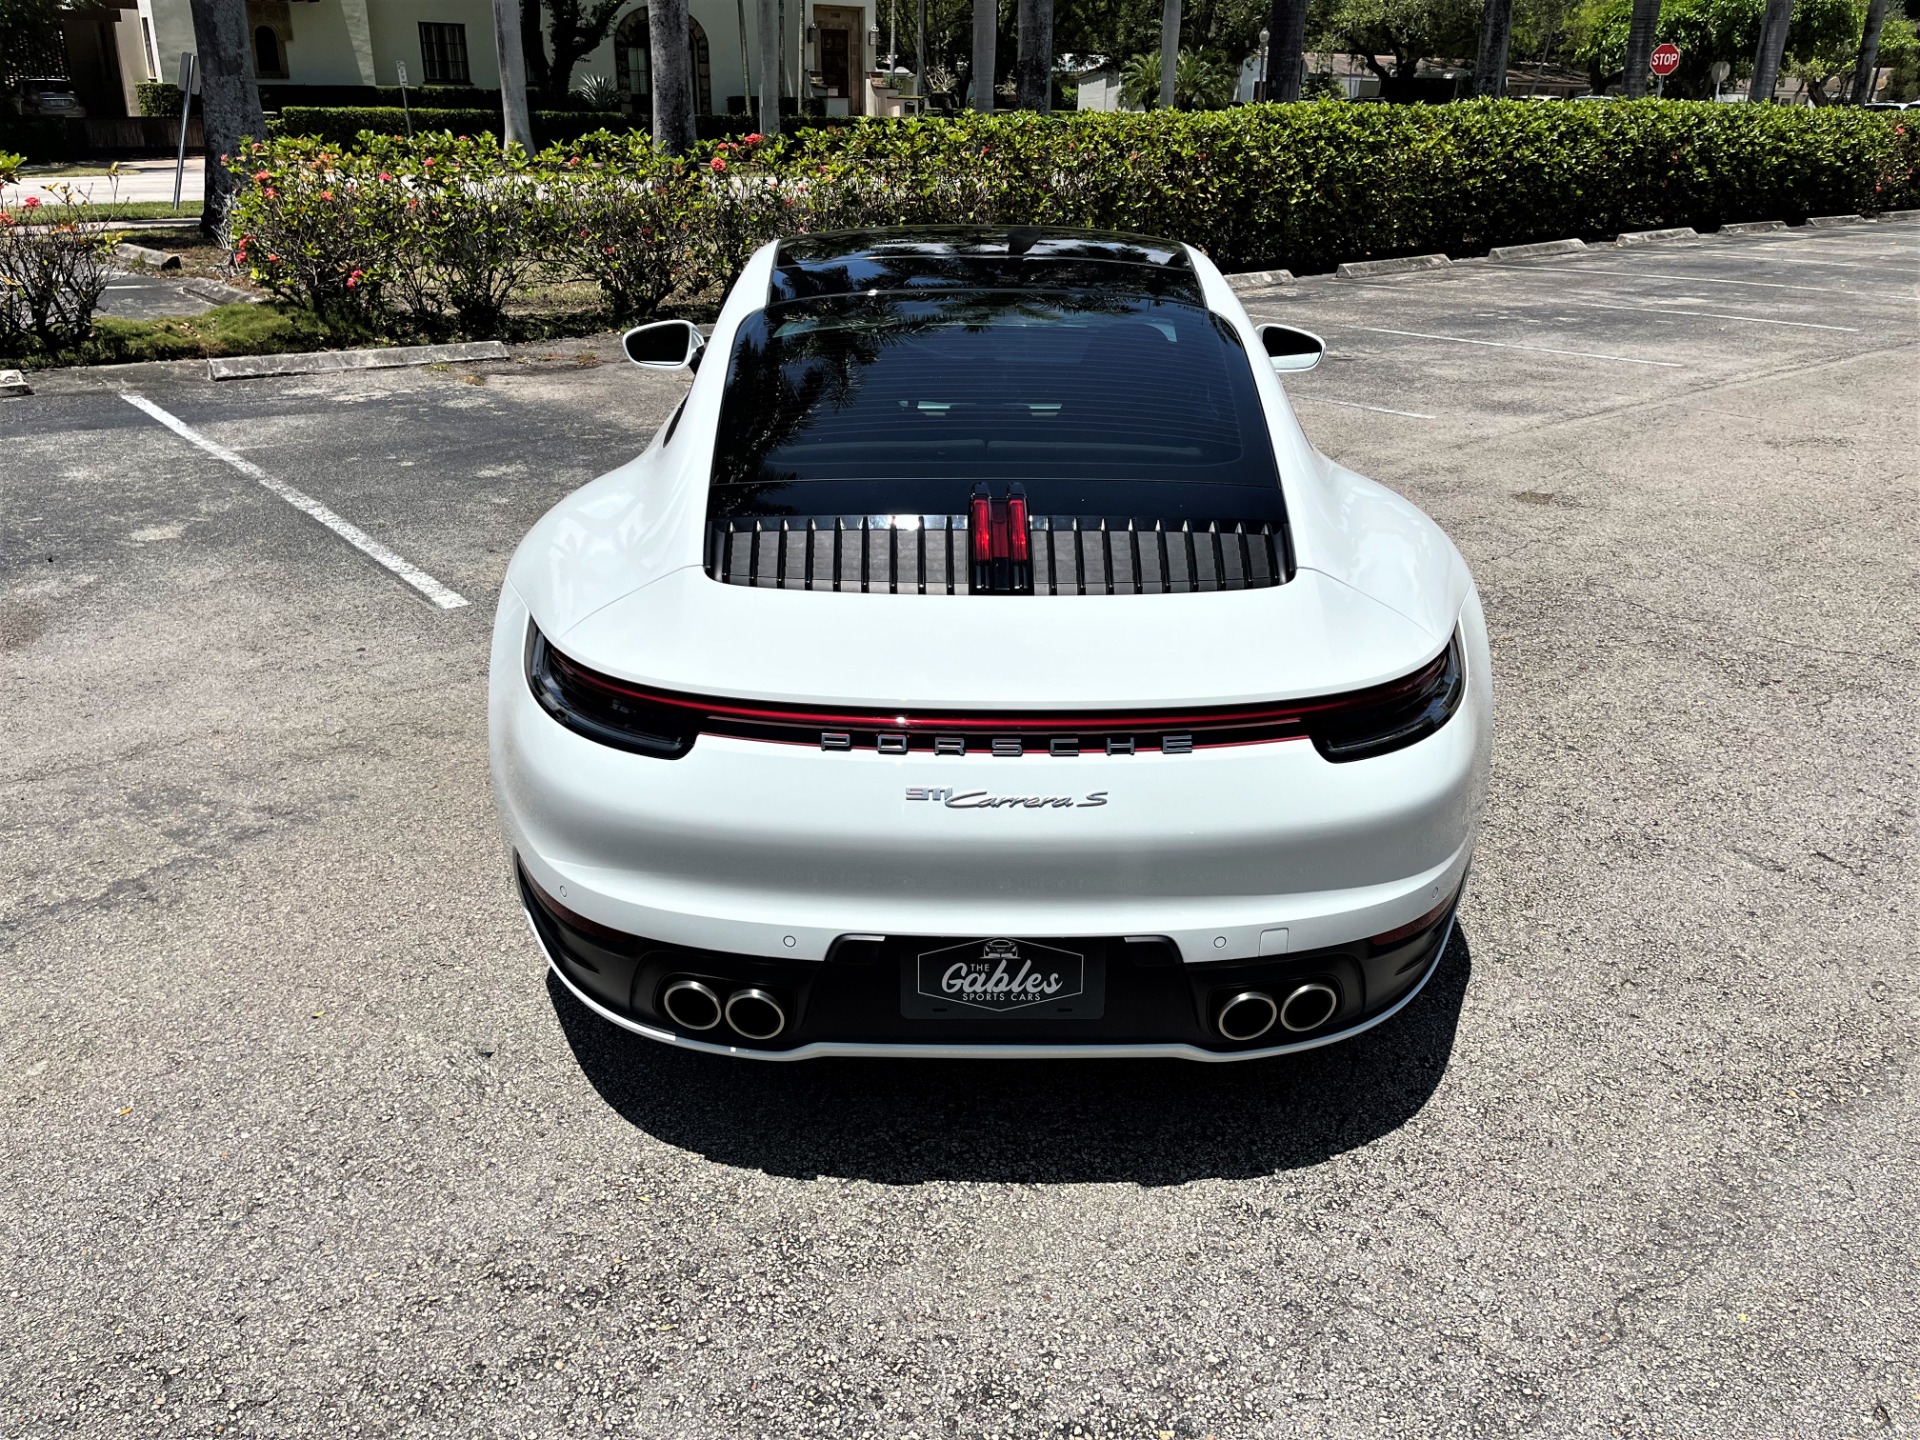 Used 2020 Porsche 911 Carrera S for sale $145,850 at The Gables Sports Cars in Miami FL 33146 4